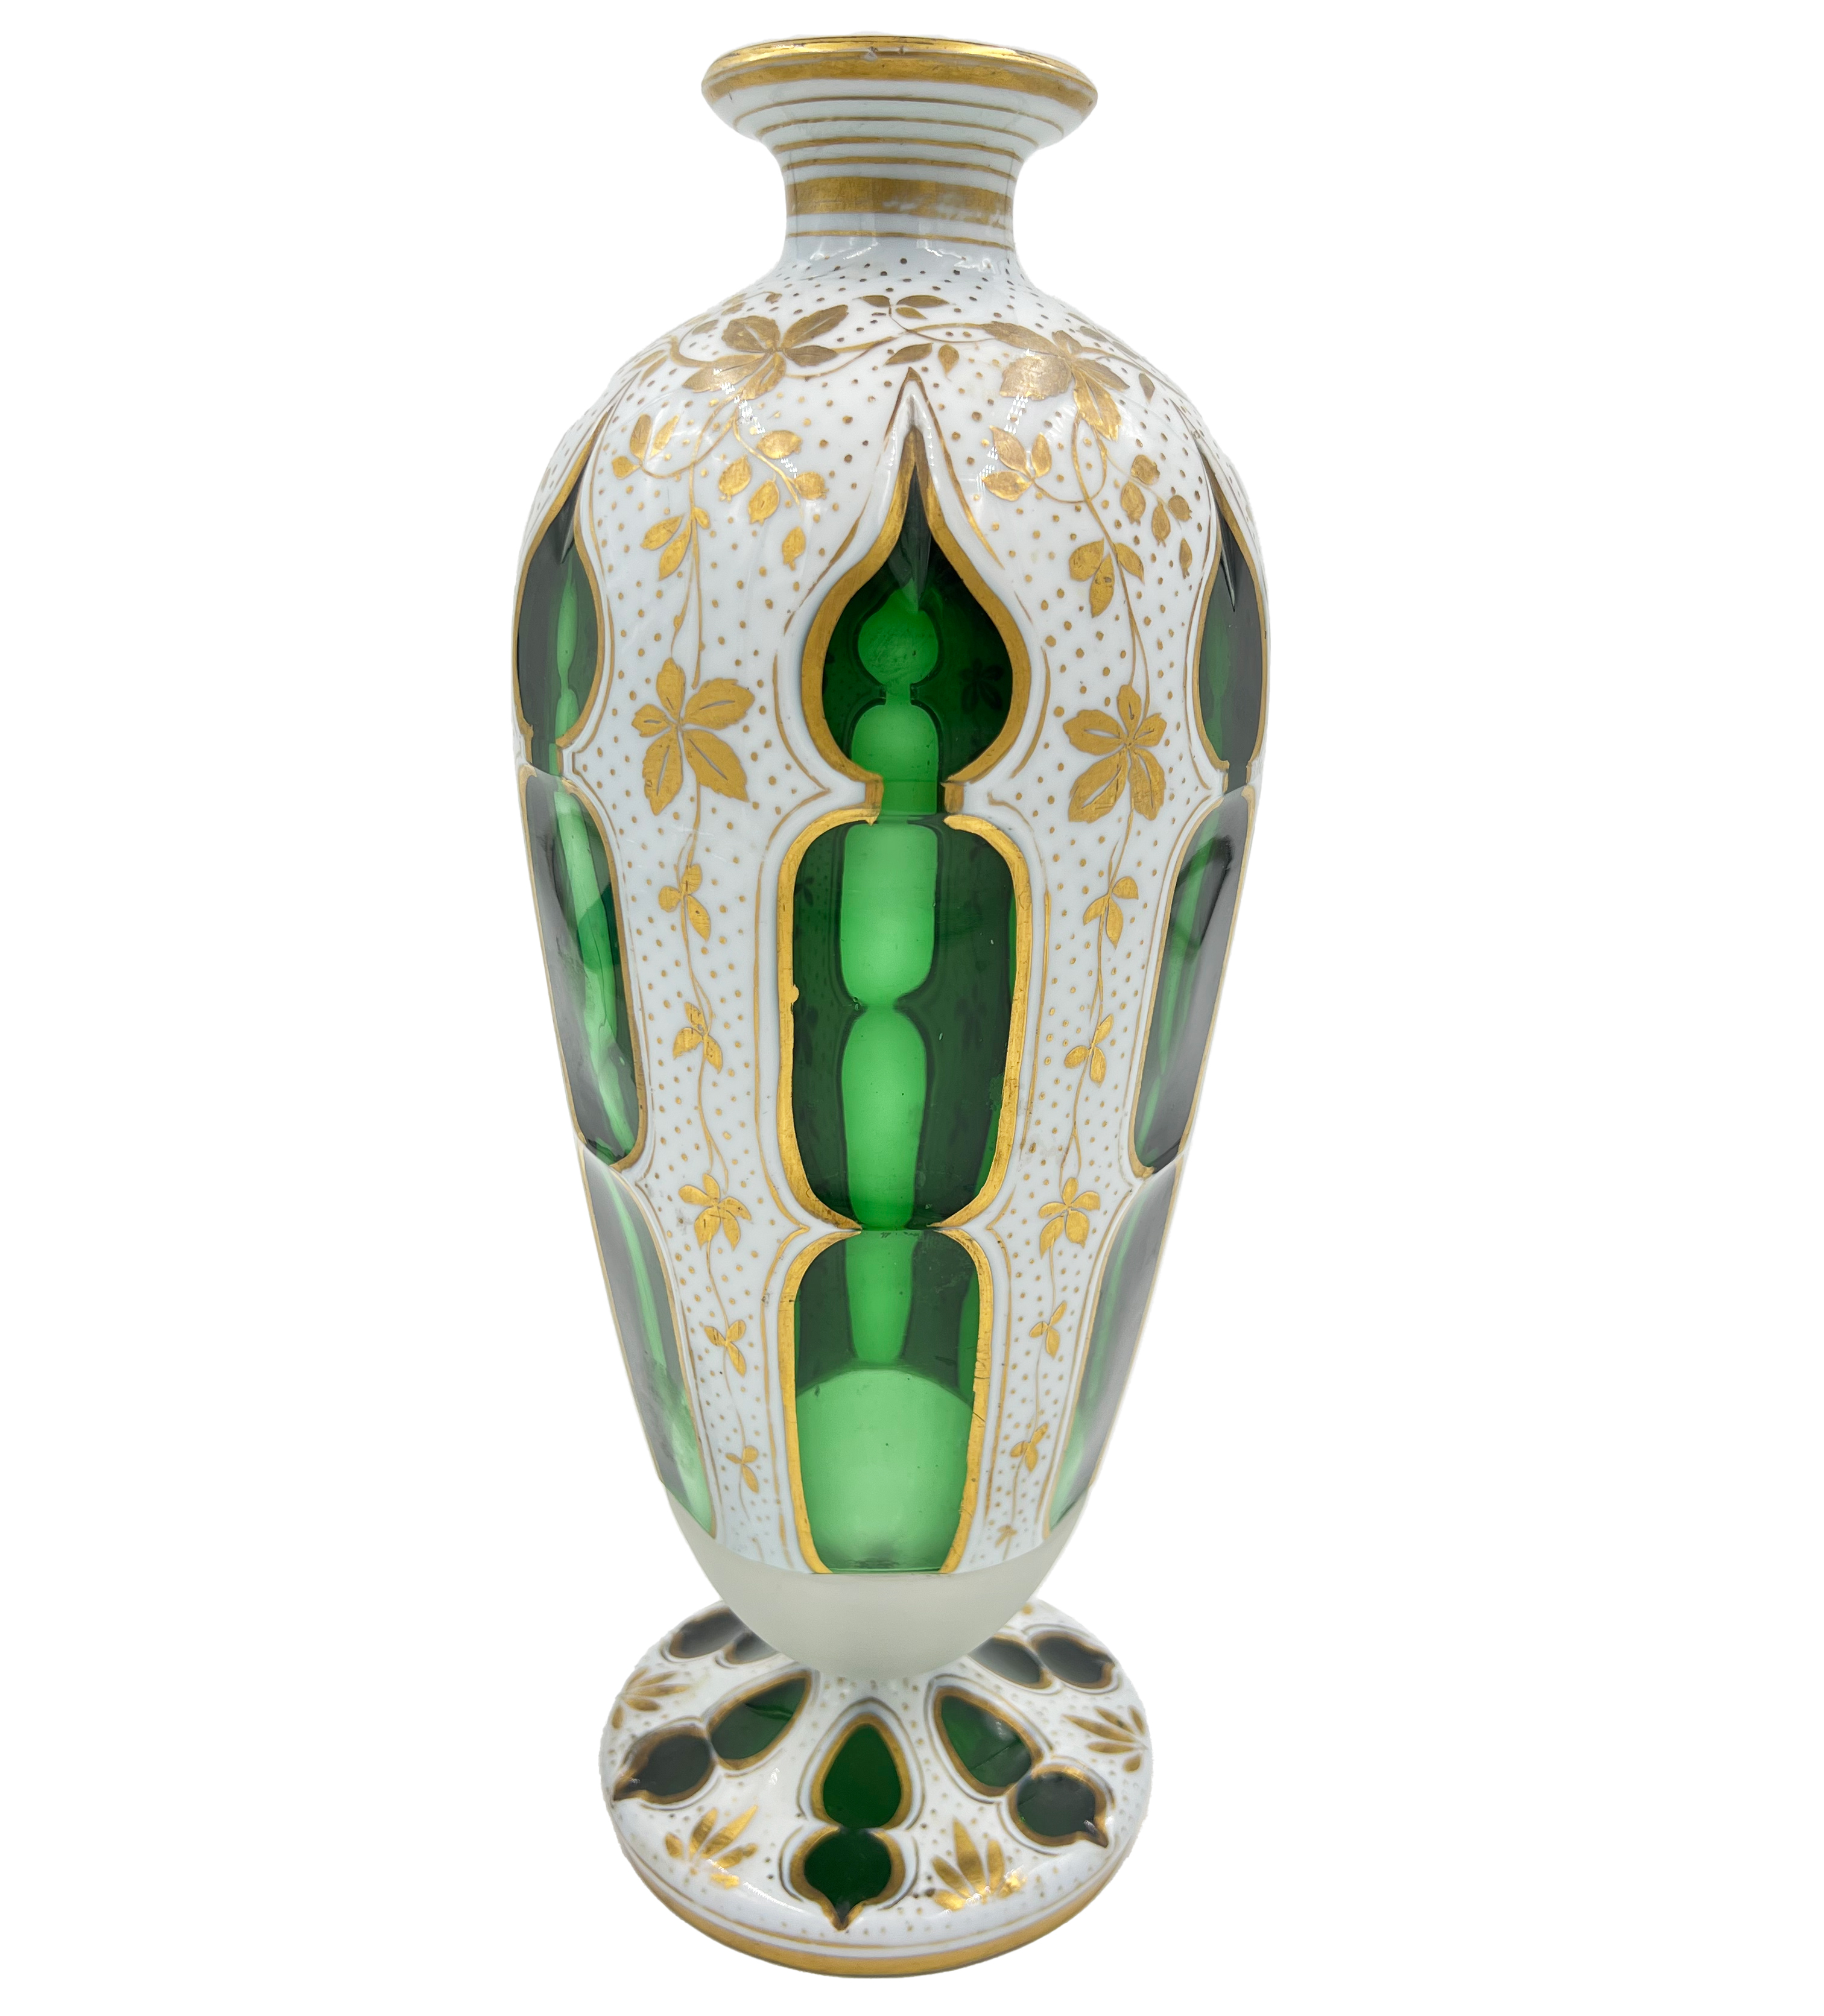 OVERLAY BOHEMIAN GLASS VASE AND PERFUME BOTTLE, 19TH CENTURY - Image 2 of 3